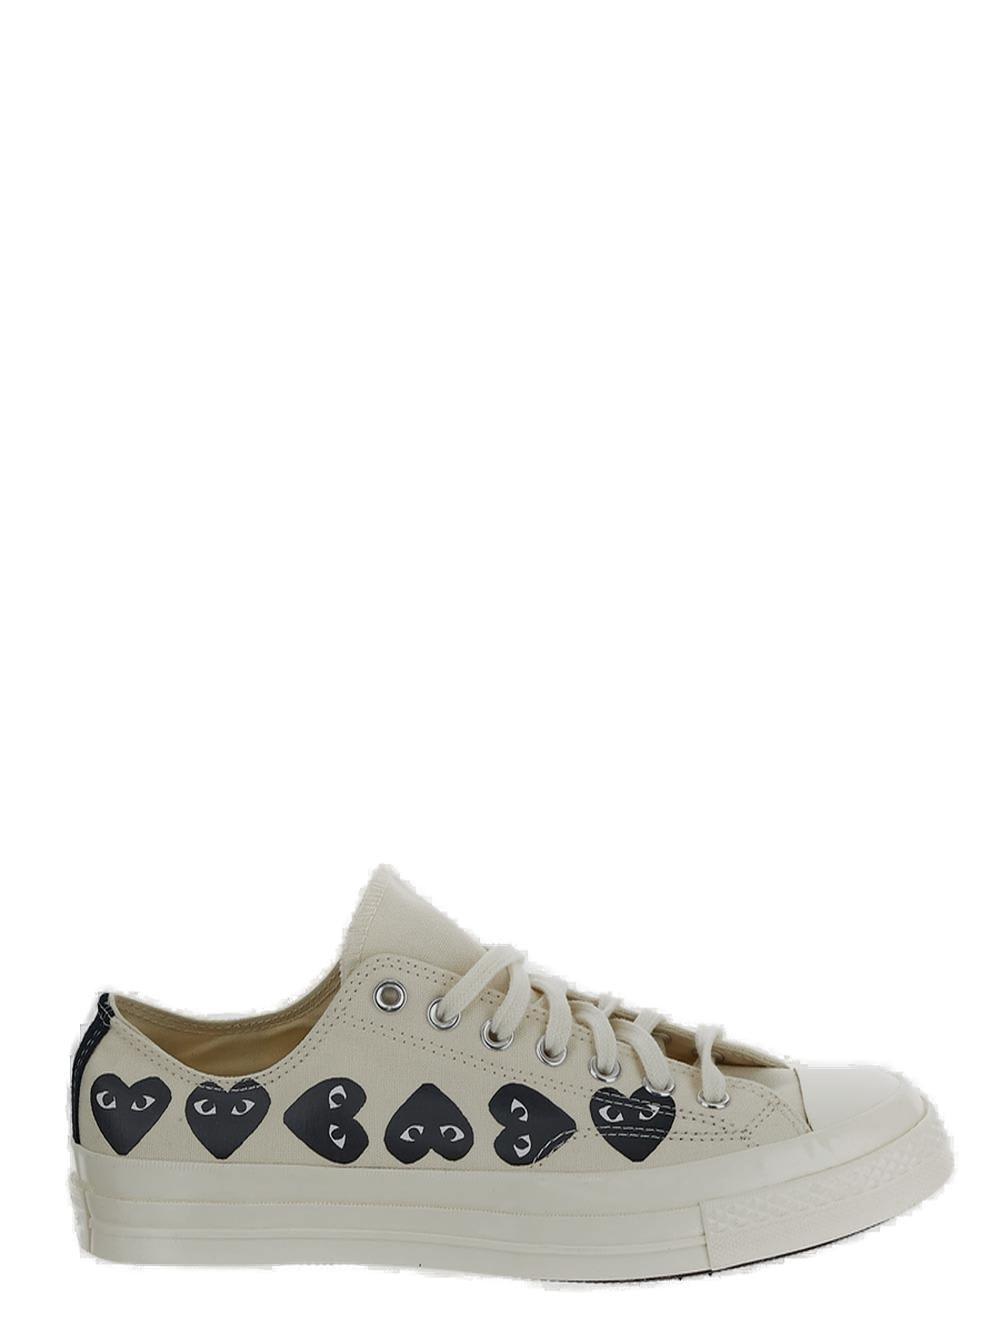 Comme des Garçons X Converse Chuck 70 Heart Printed Lace-up Sneakers